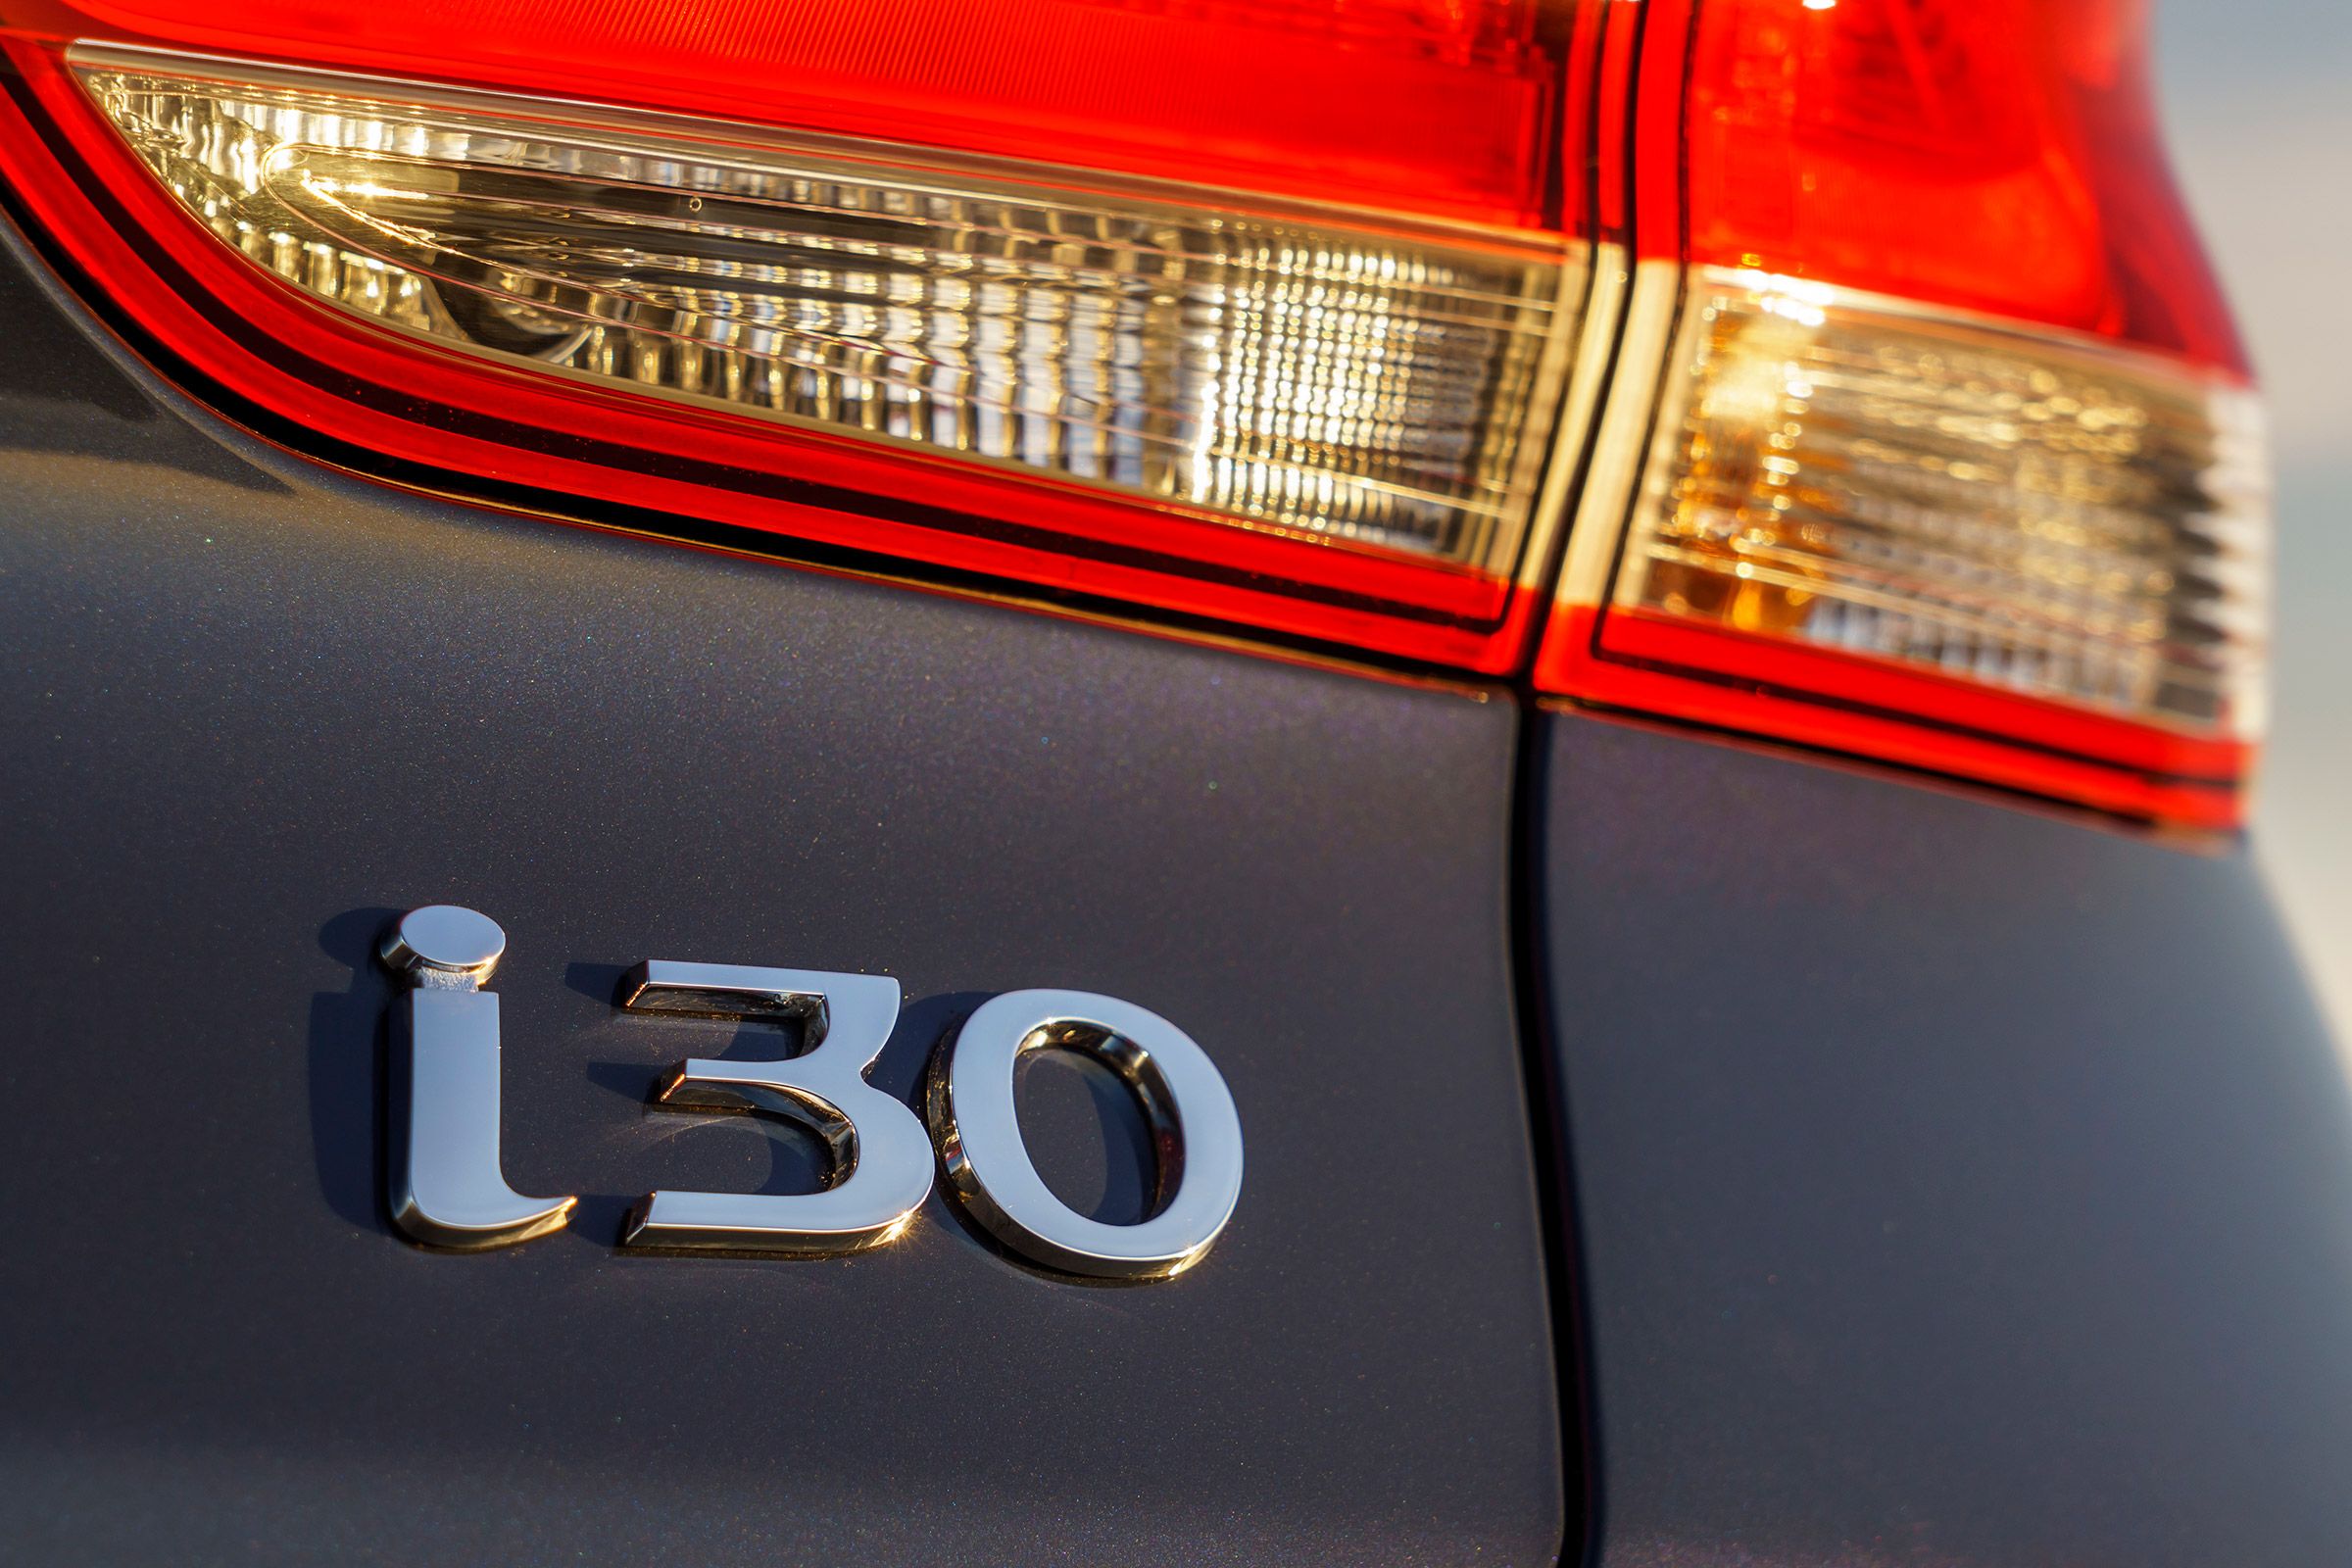 2017 Hyundai I30 Exterior View Rear Emblem (View 18 of 23)